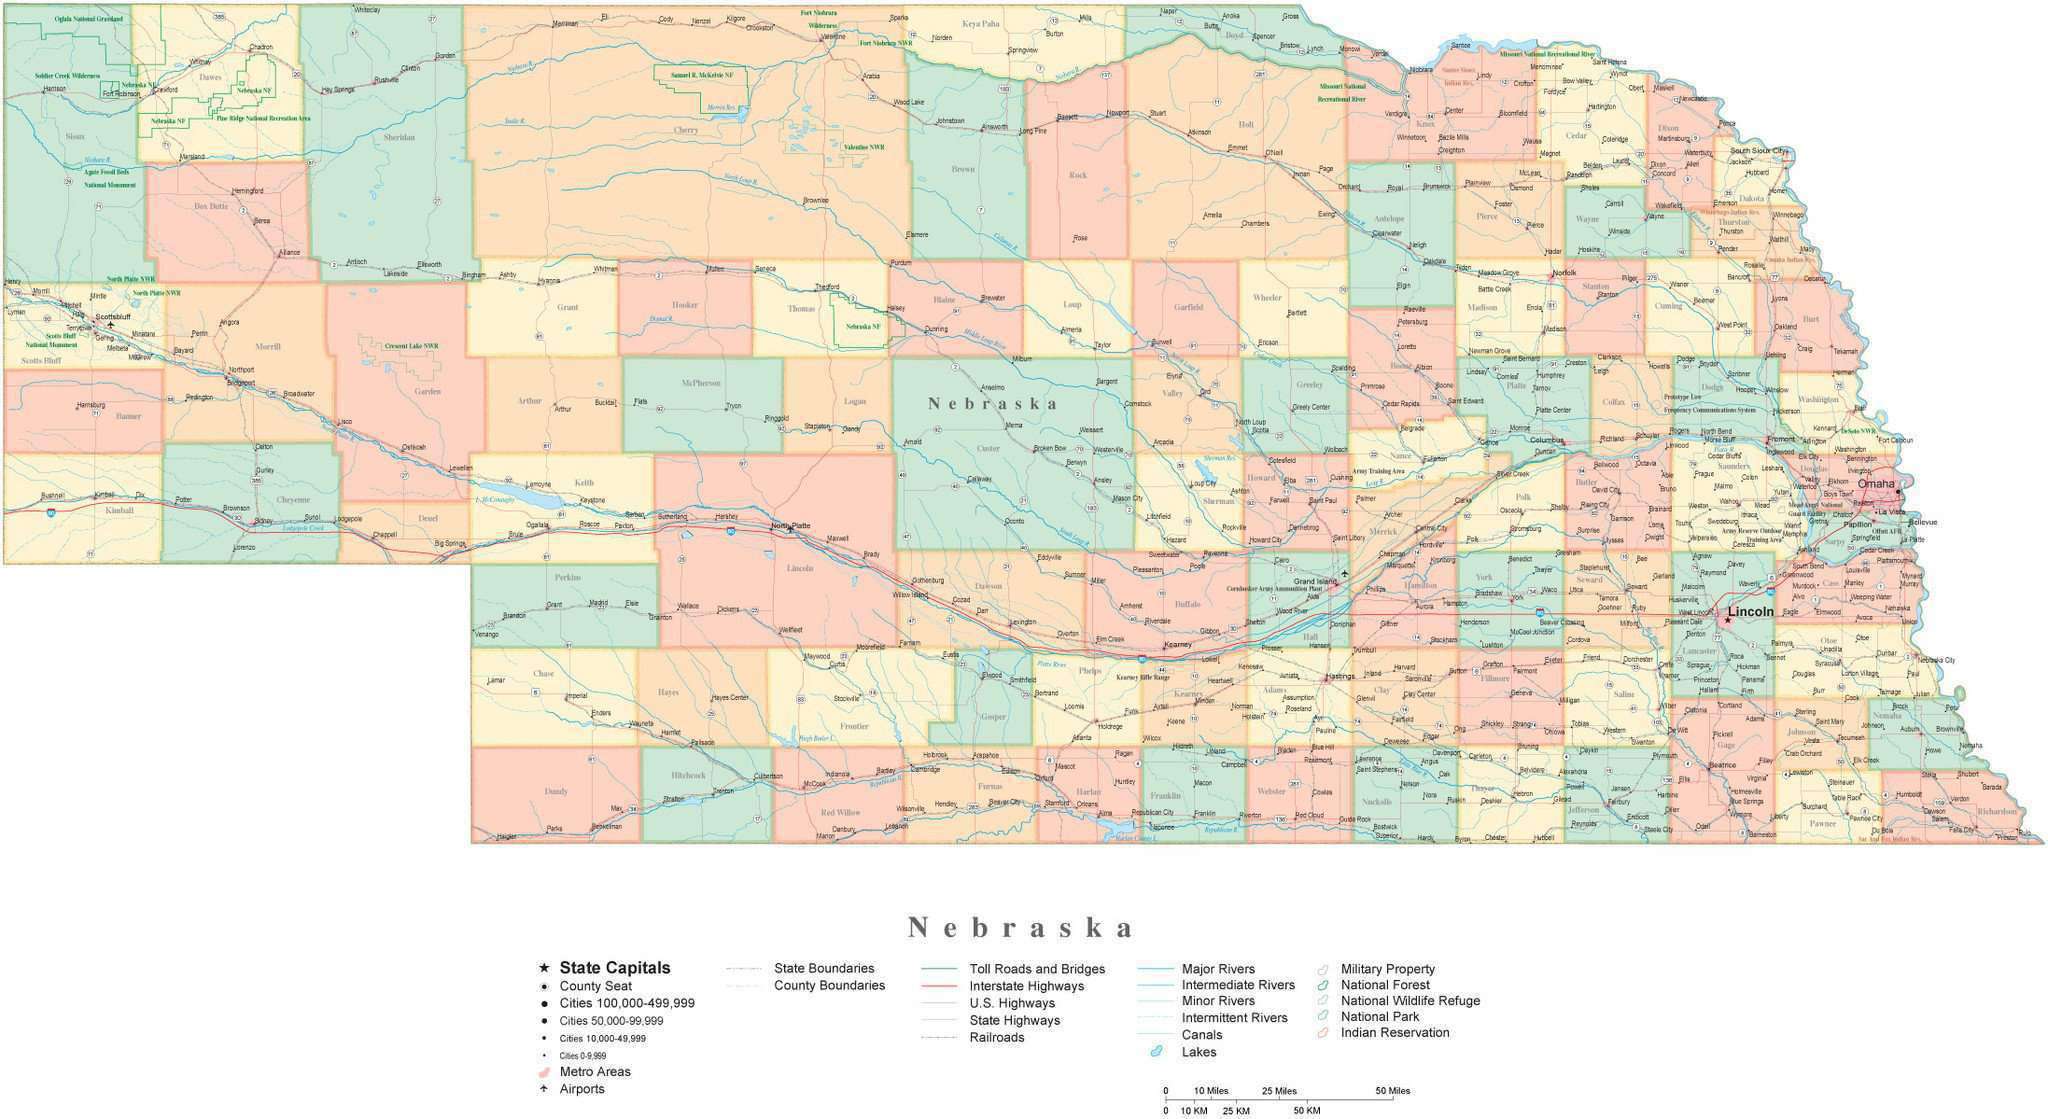 State Map of Nebraska in Adobe Illustrator vector format. Detailed